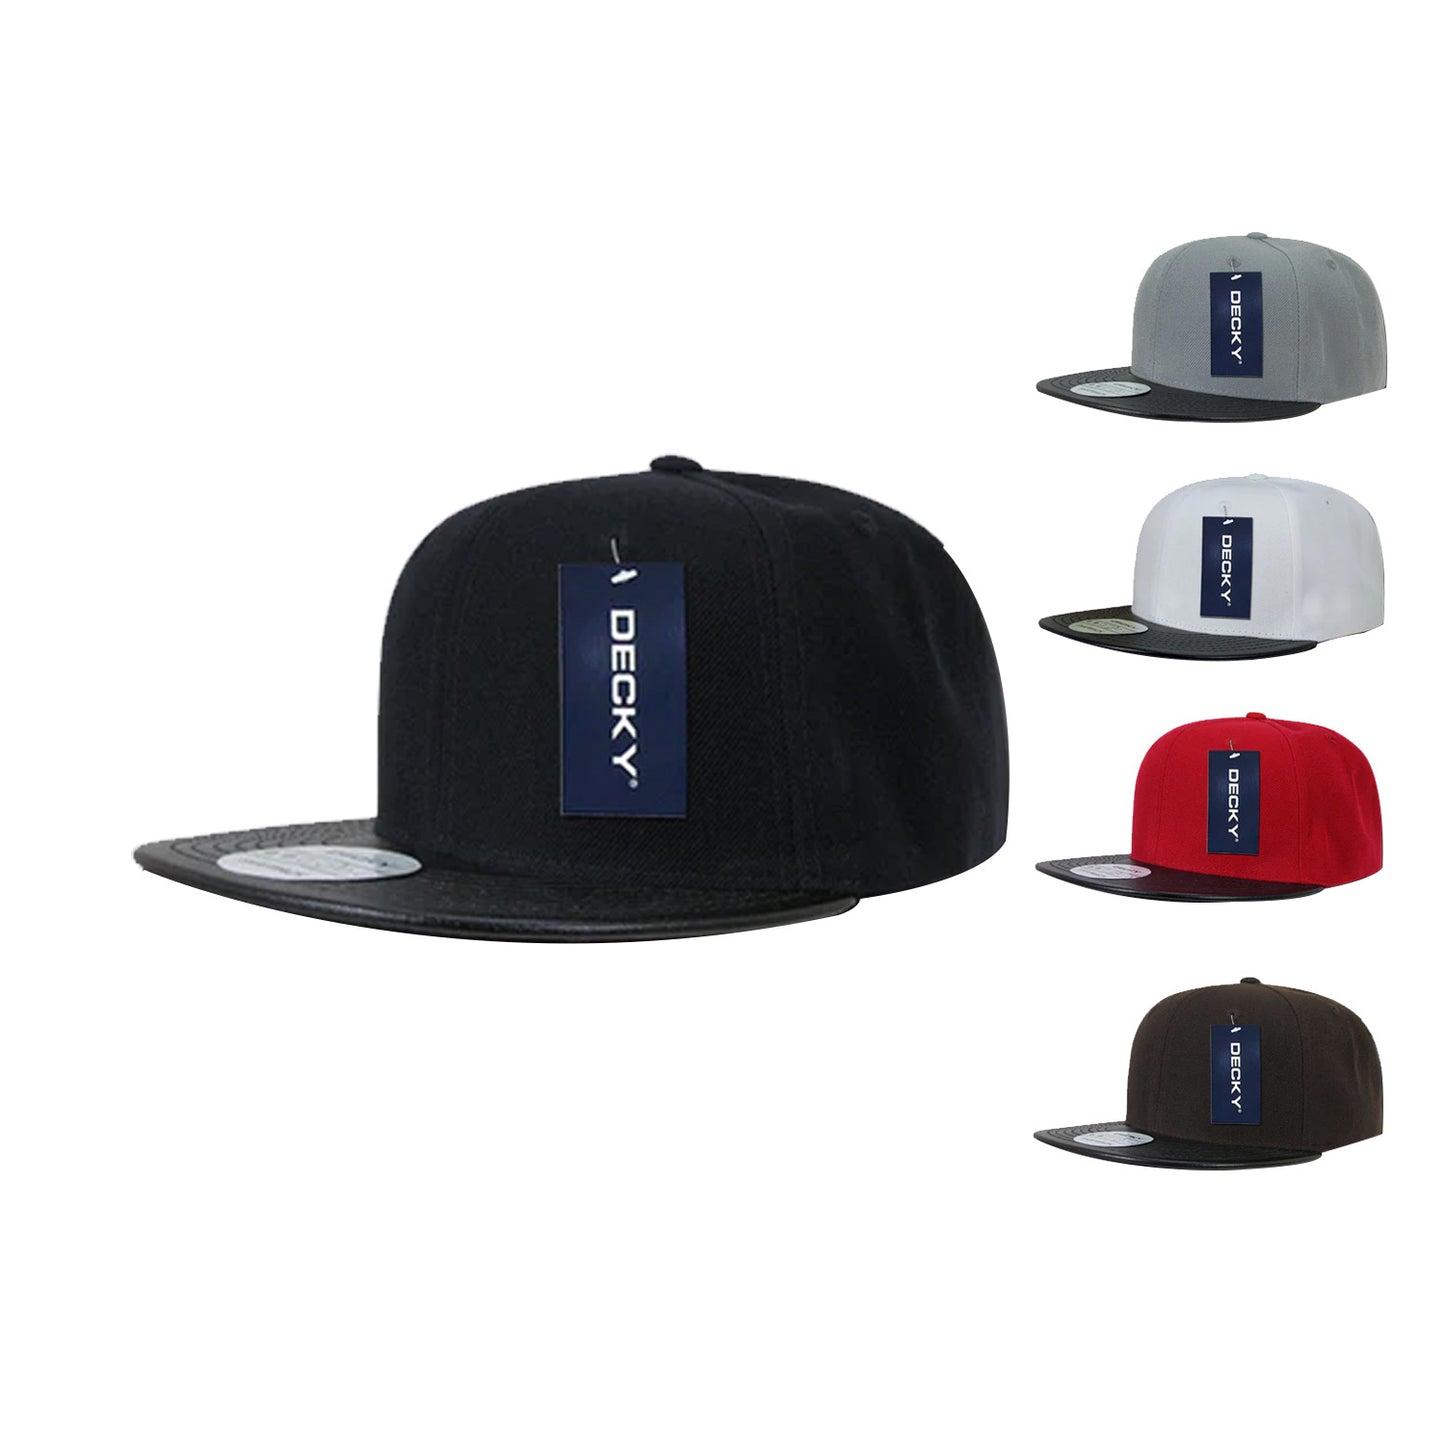 Decky 1071 Vinyl Brim Flat Bill Snapback Hats High Profile 6 Panel Caps